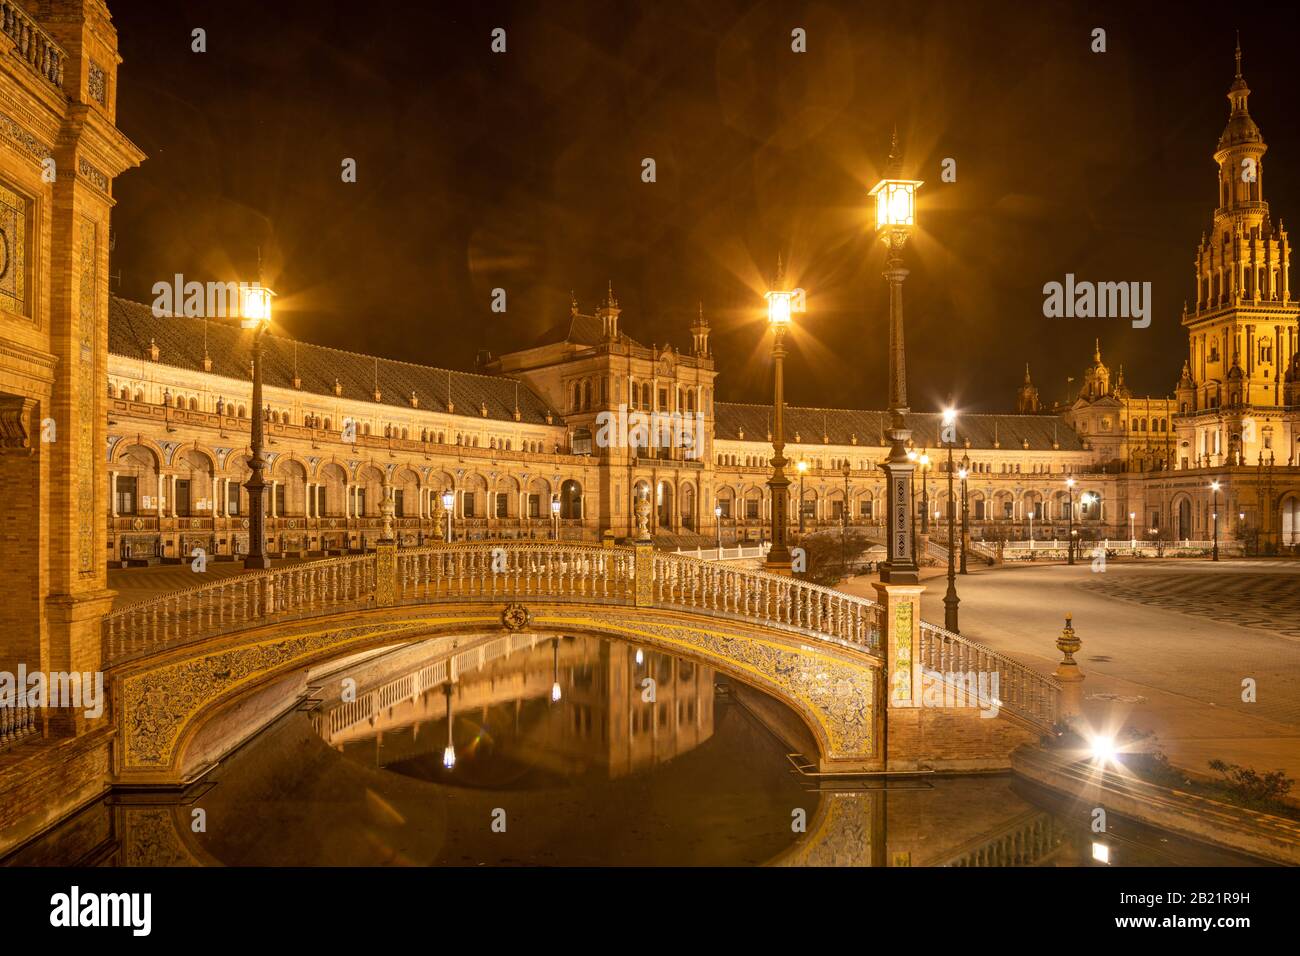 Plaza de Espana Square located in Seville at night, Spain Andalusia color image Stock Photo